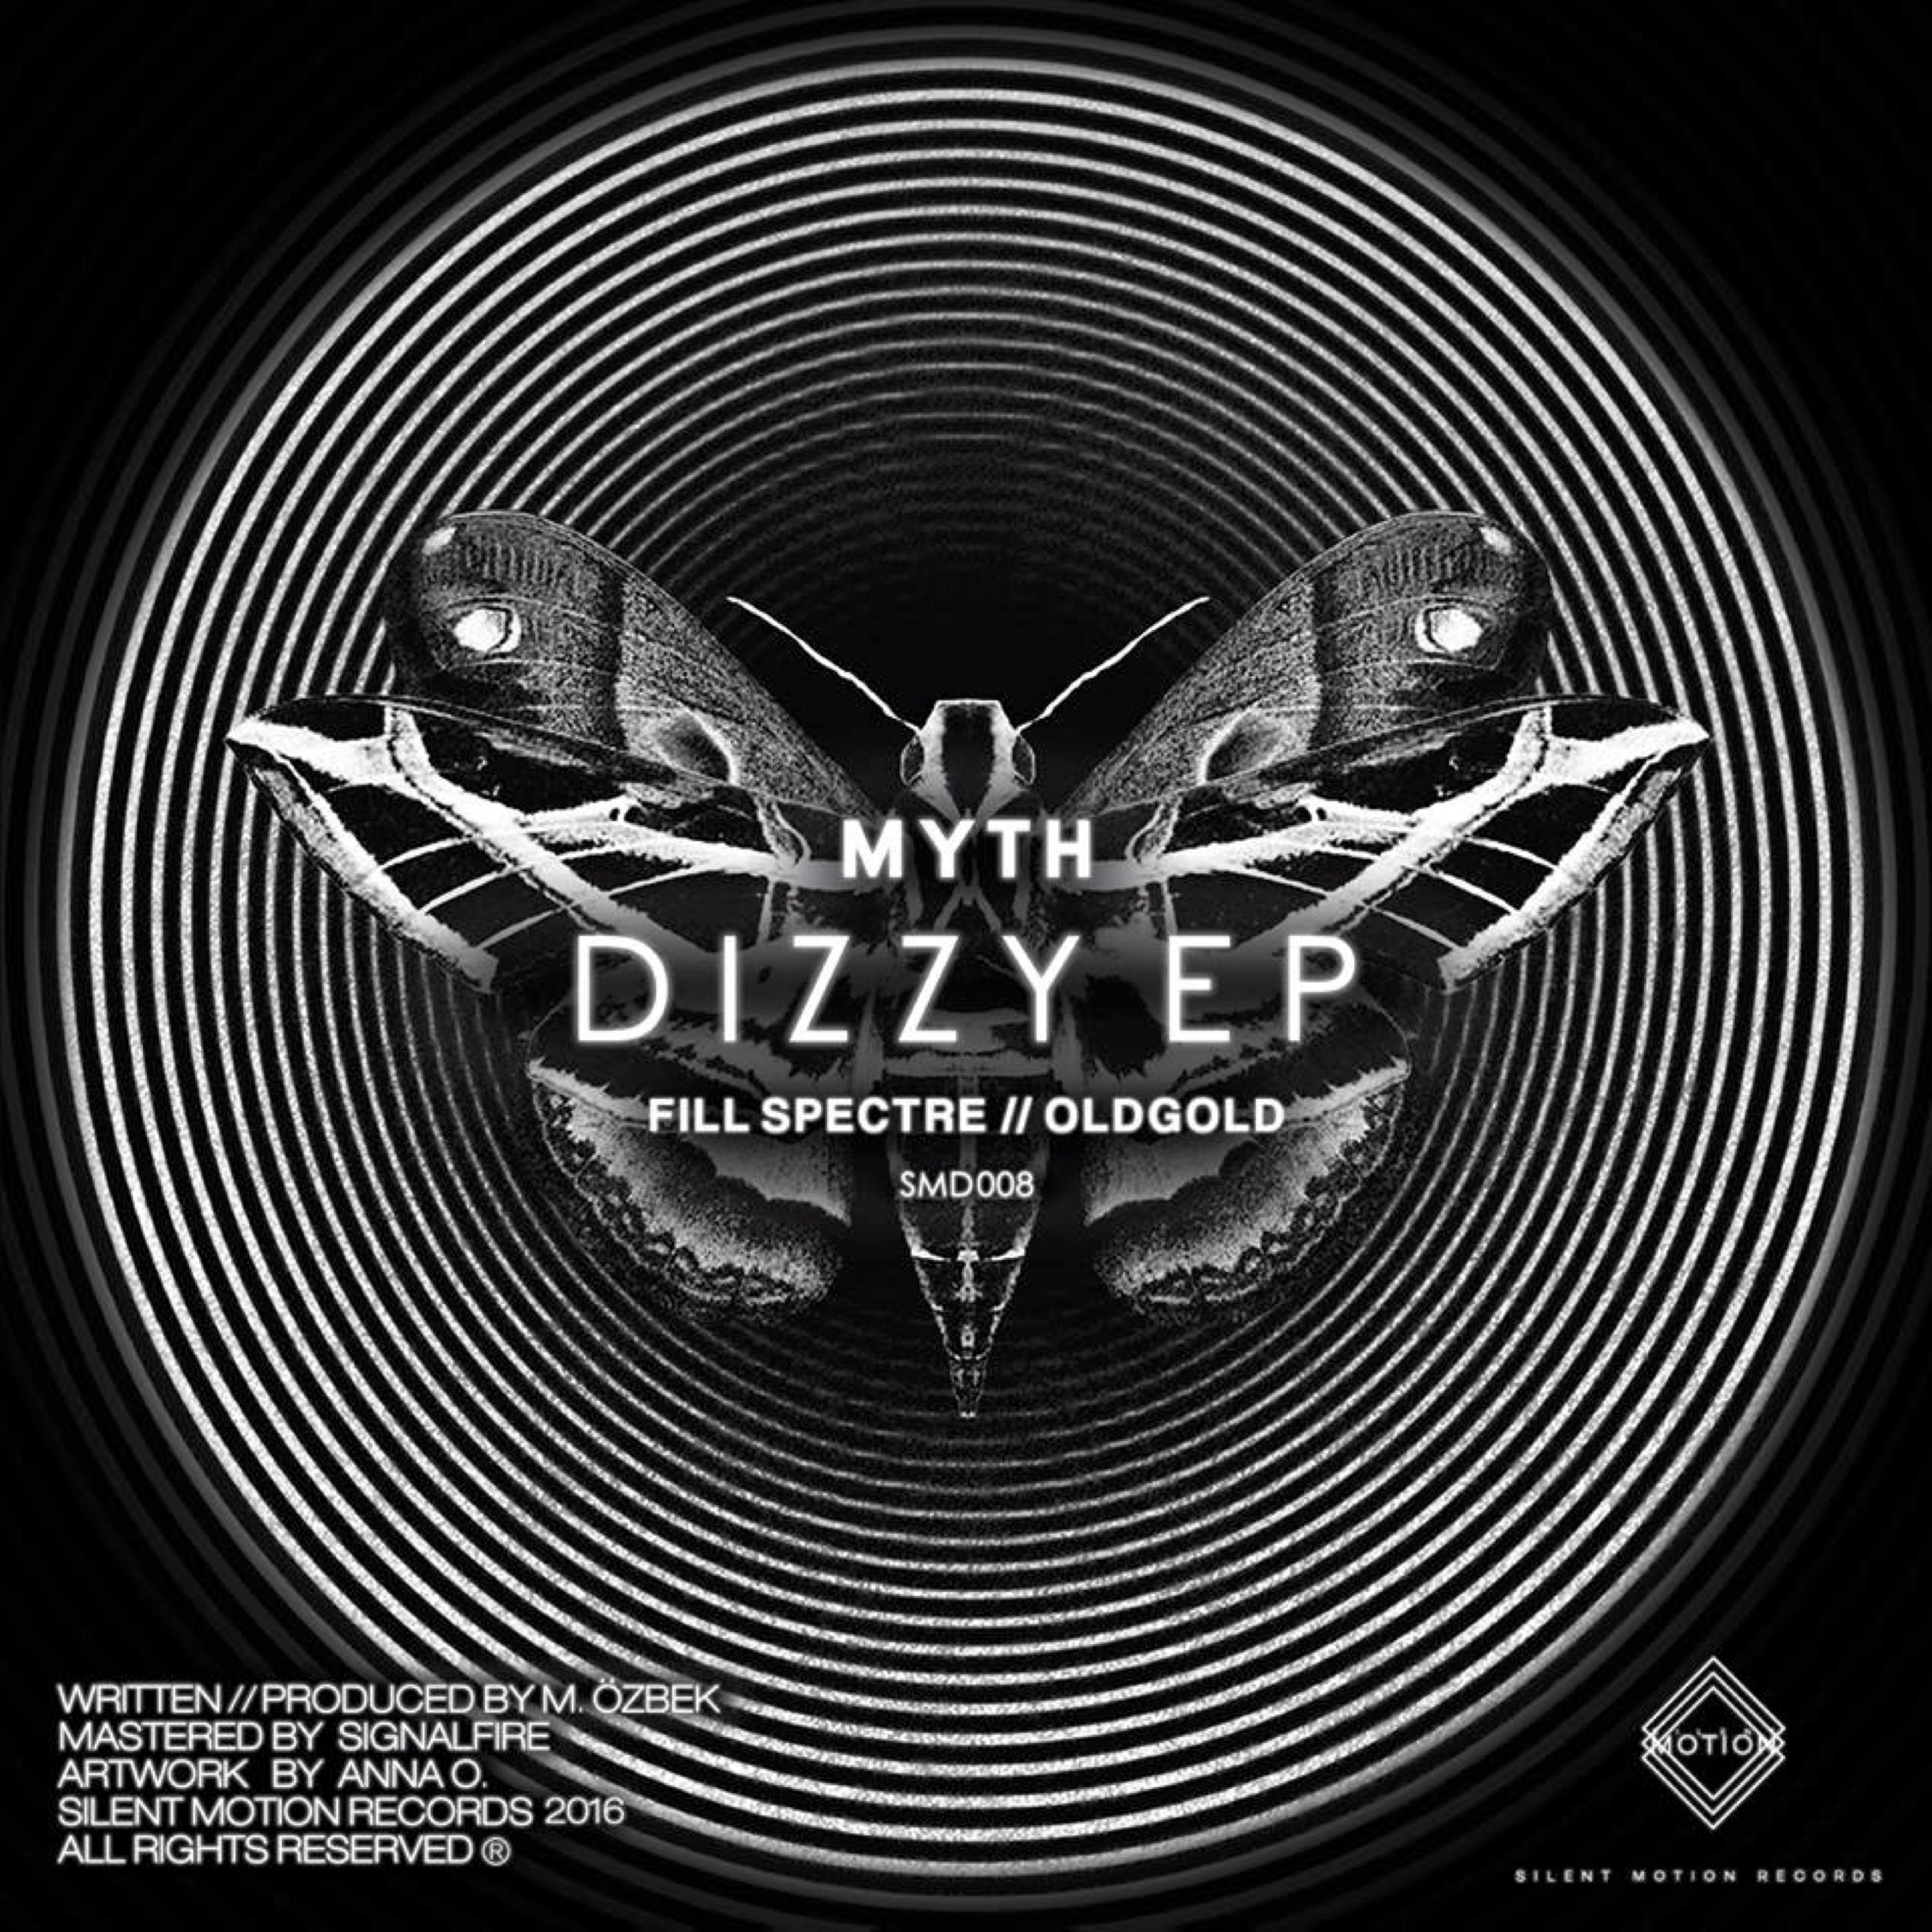 Dizzy (Fill Spectre Remix)